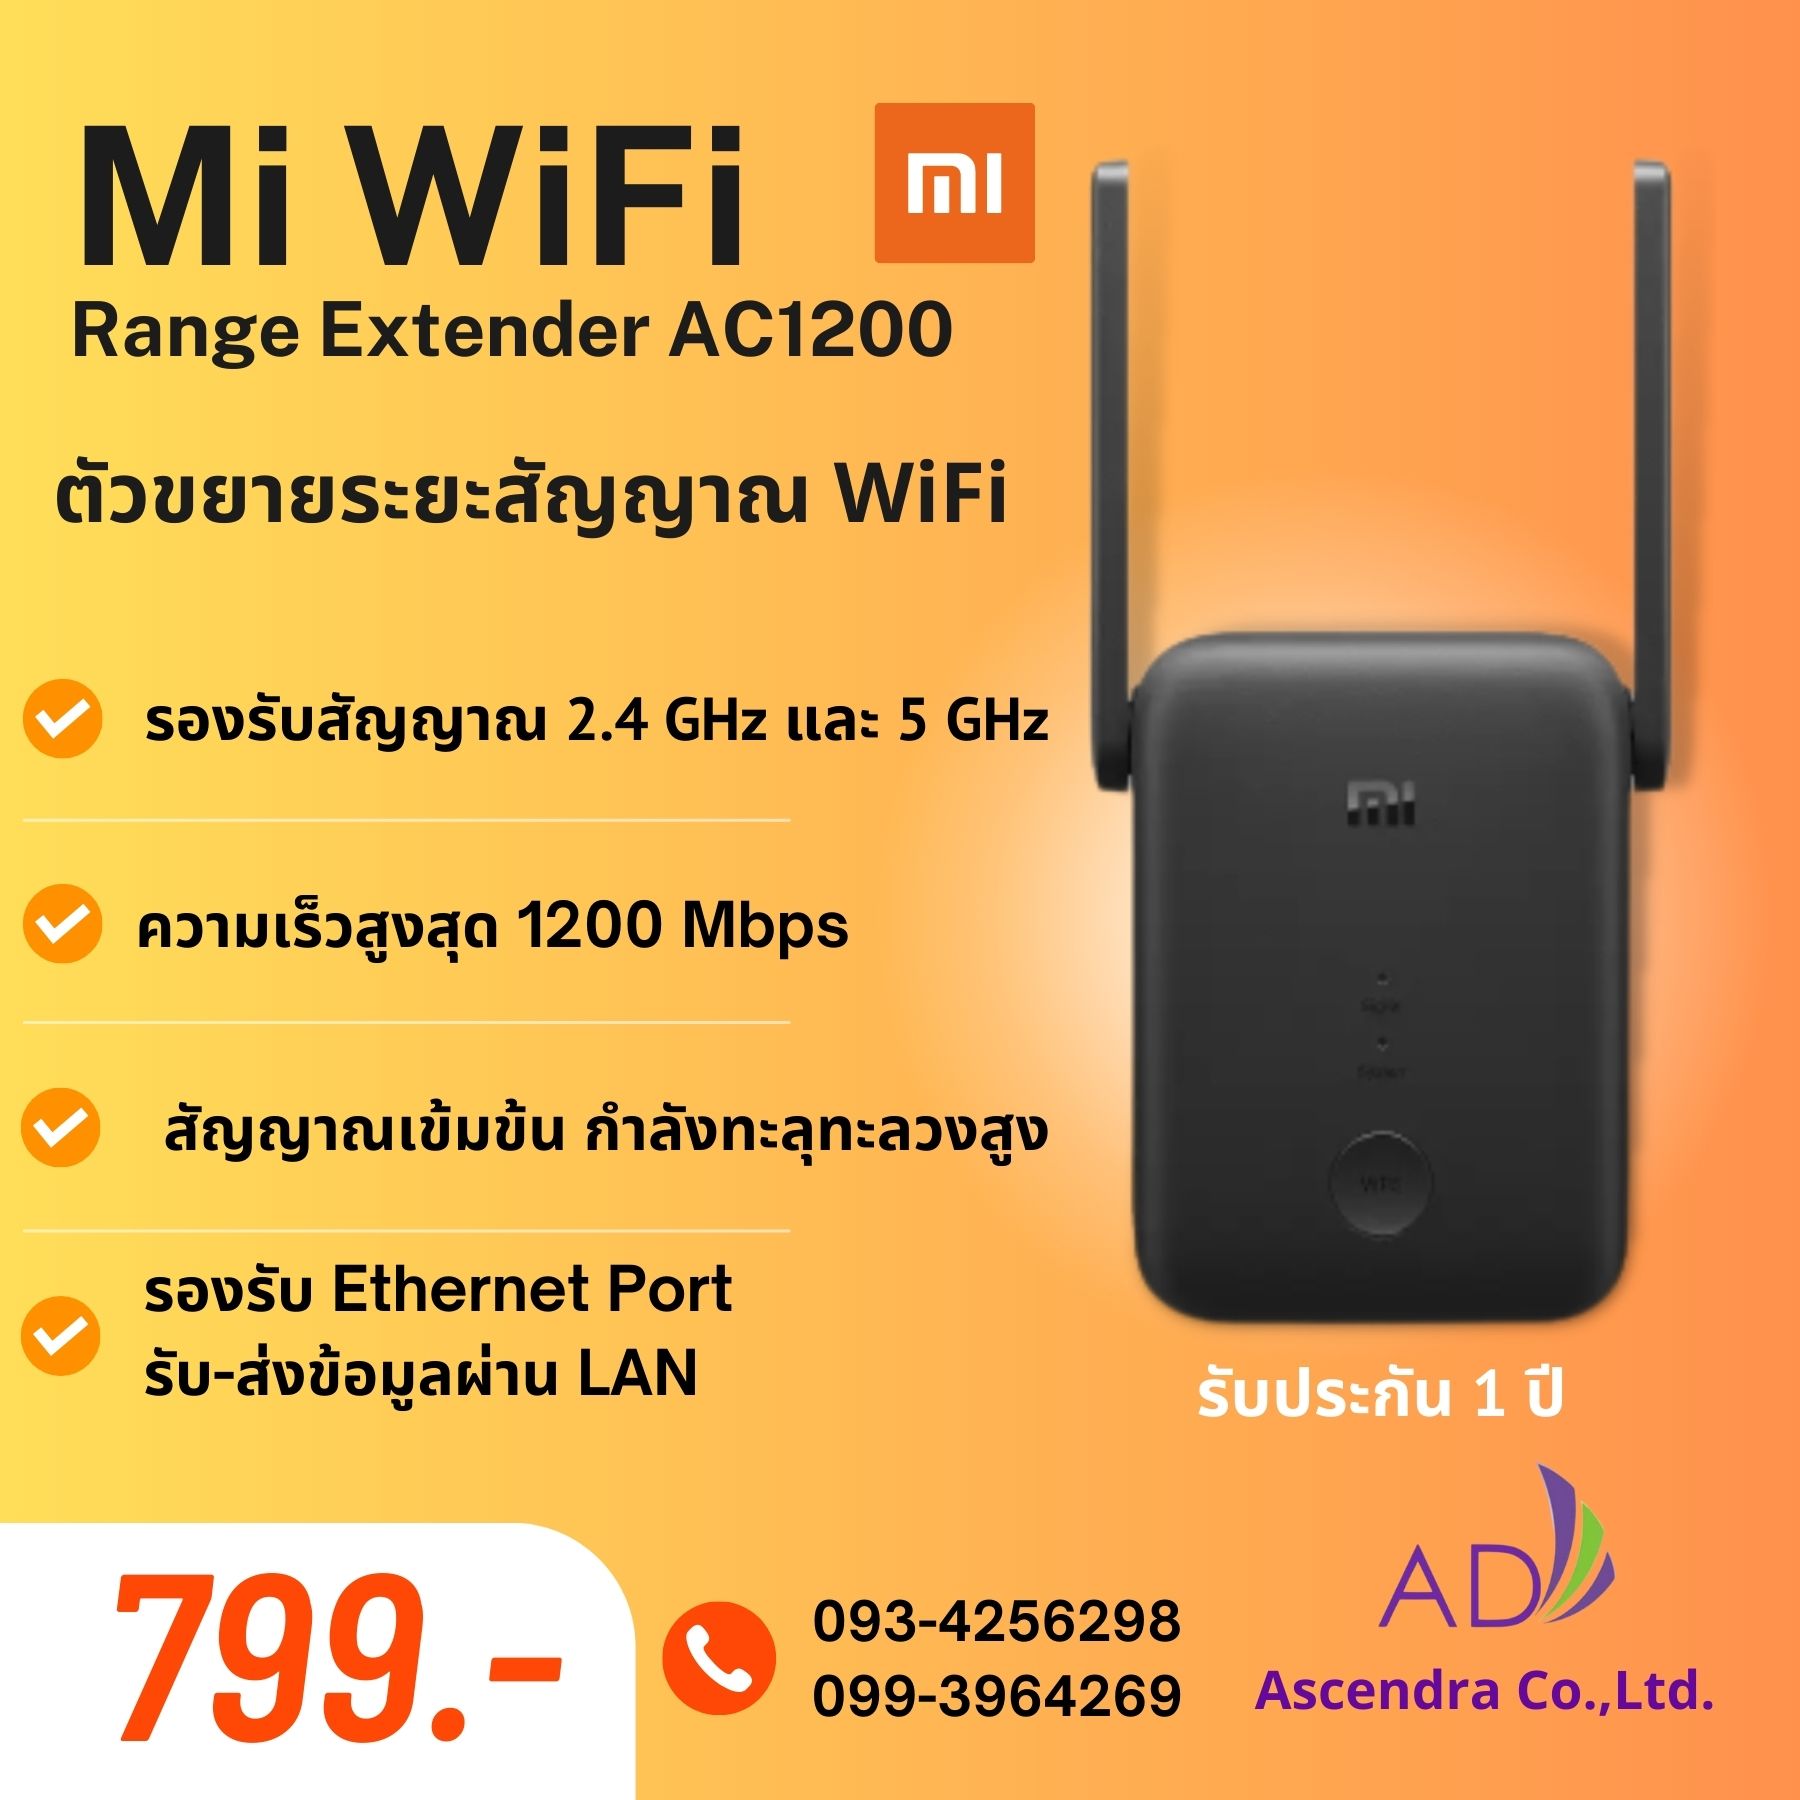 Mi WiFi Rang Extender AC1200 รุ่น RA75